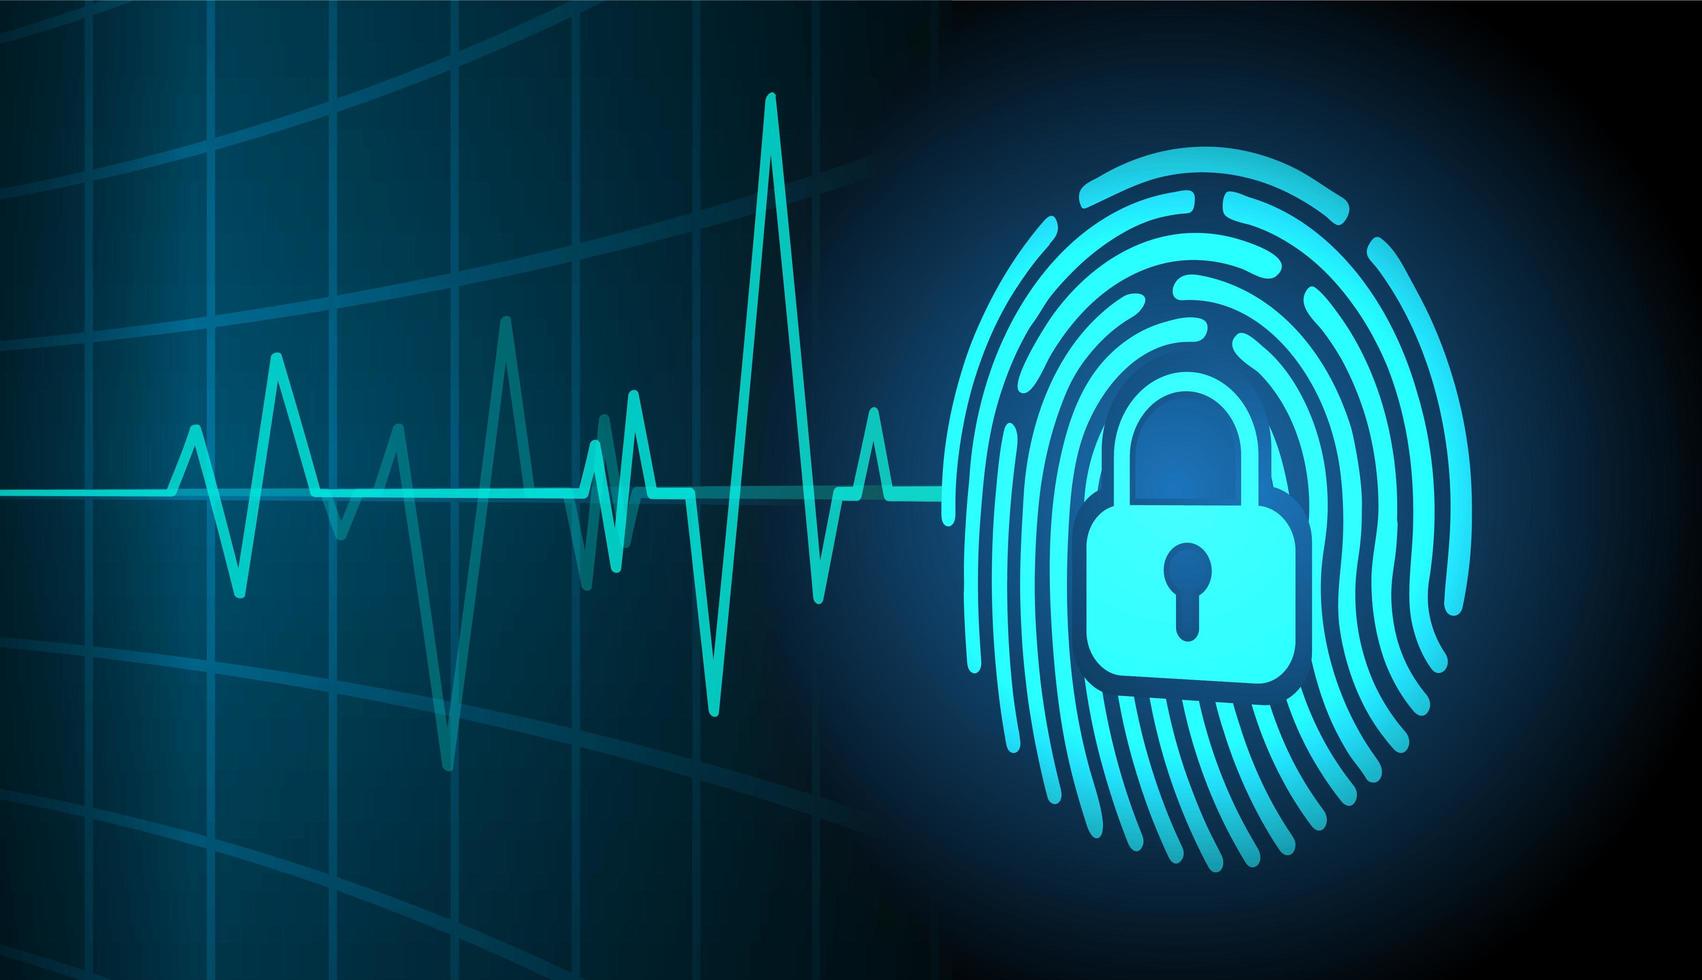 Fingerprint Network Cyber Security Background vector